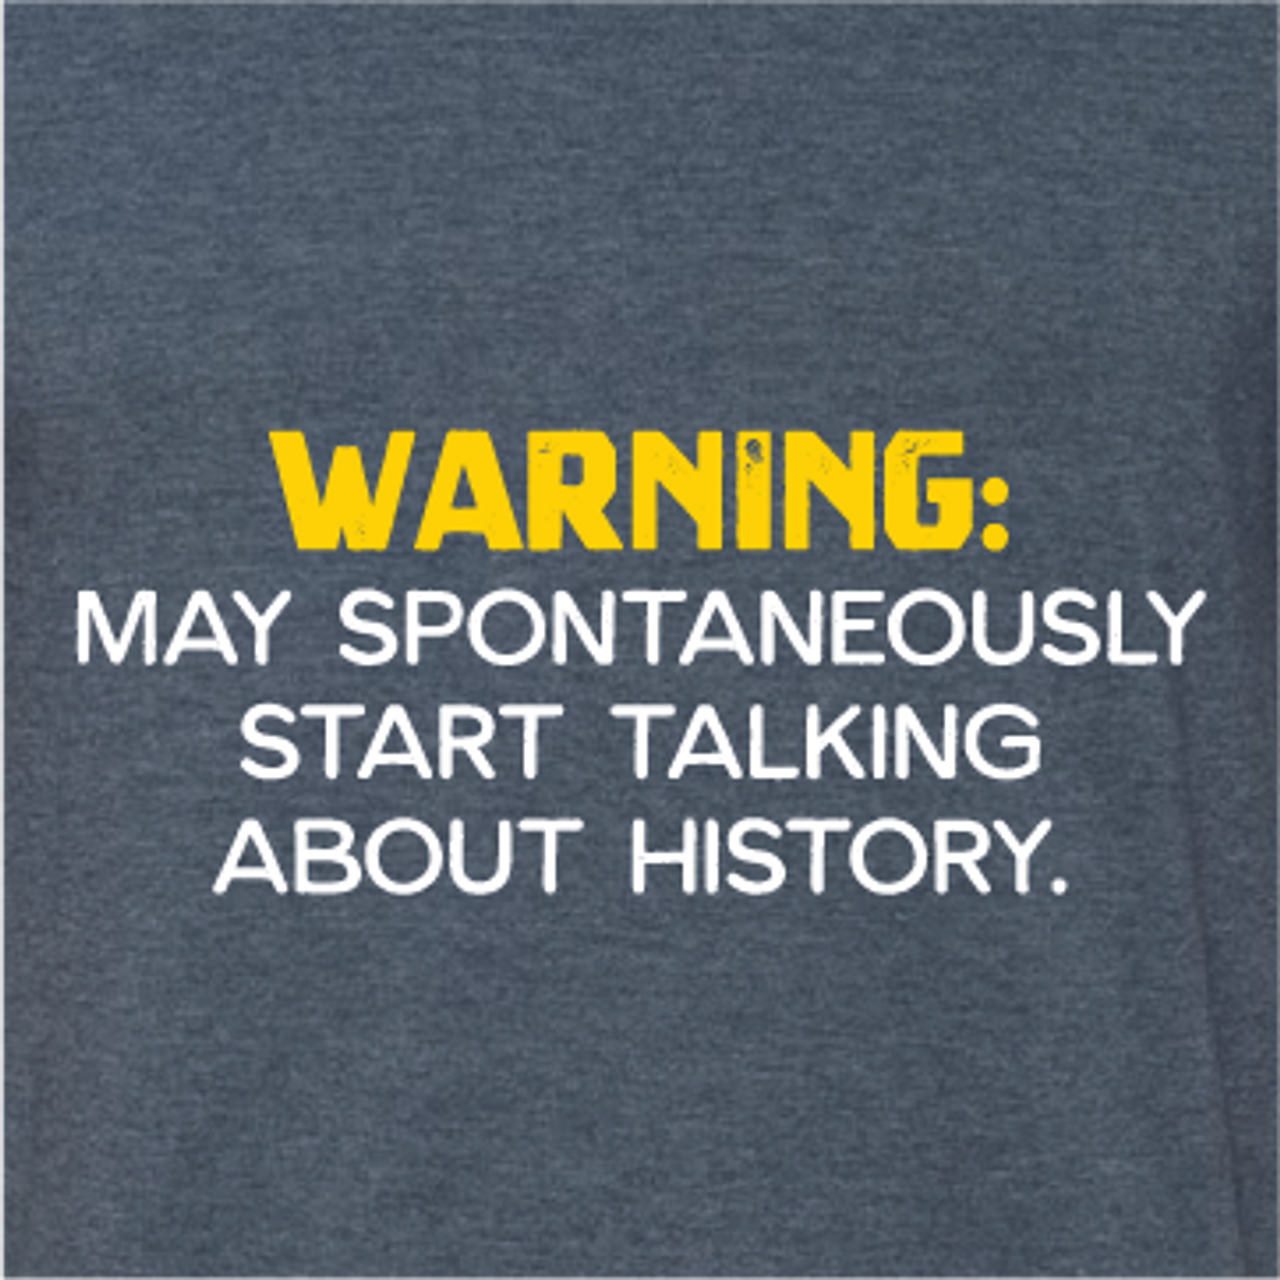 "Warning - May Spontaneously Start Talking About History"